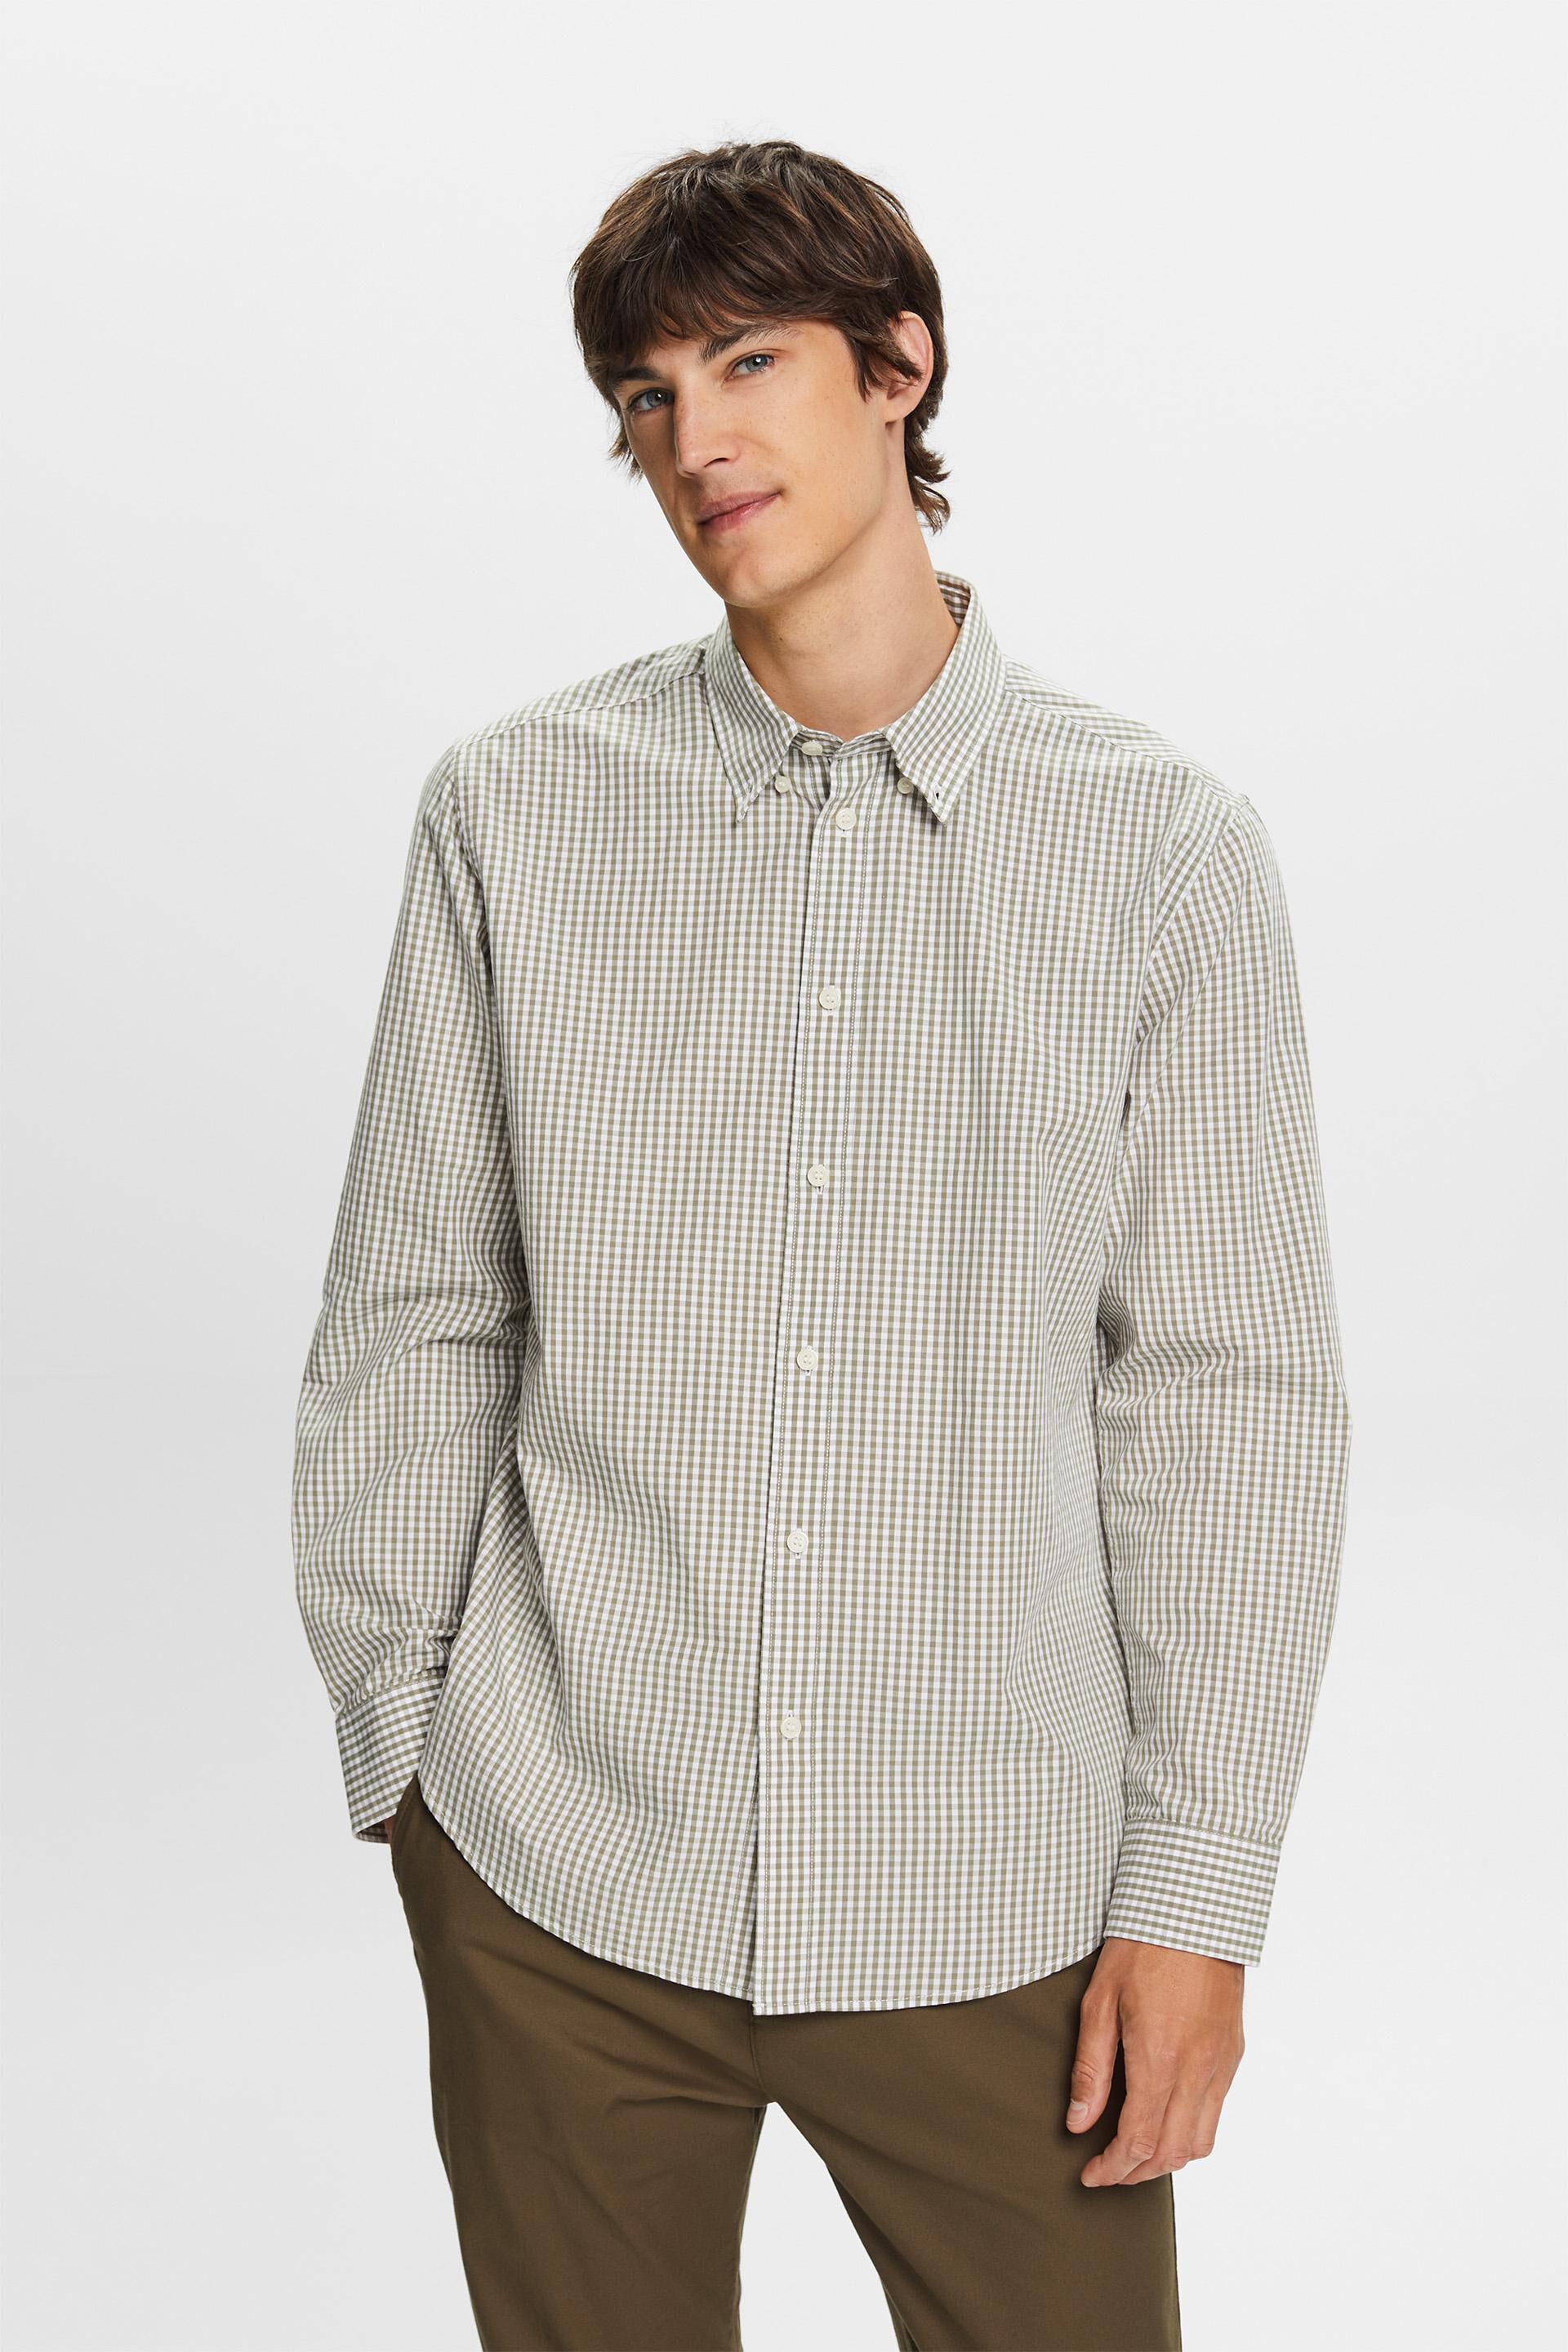 Esprit shirt, cotton 100% Vichy button-down